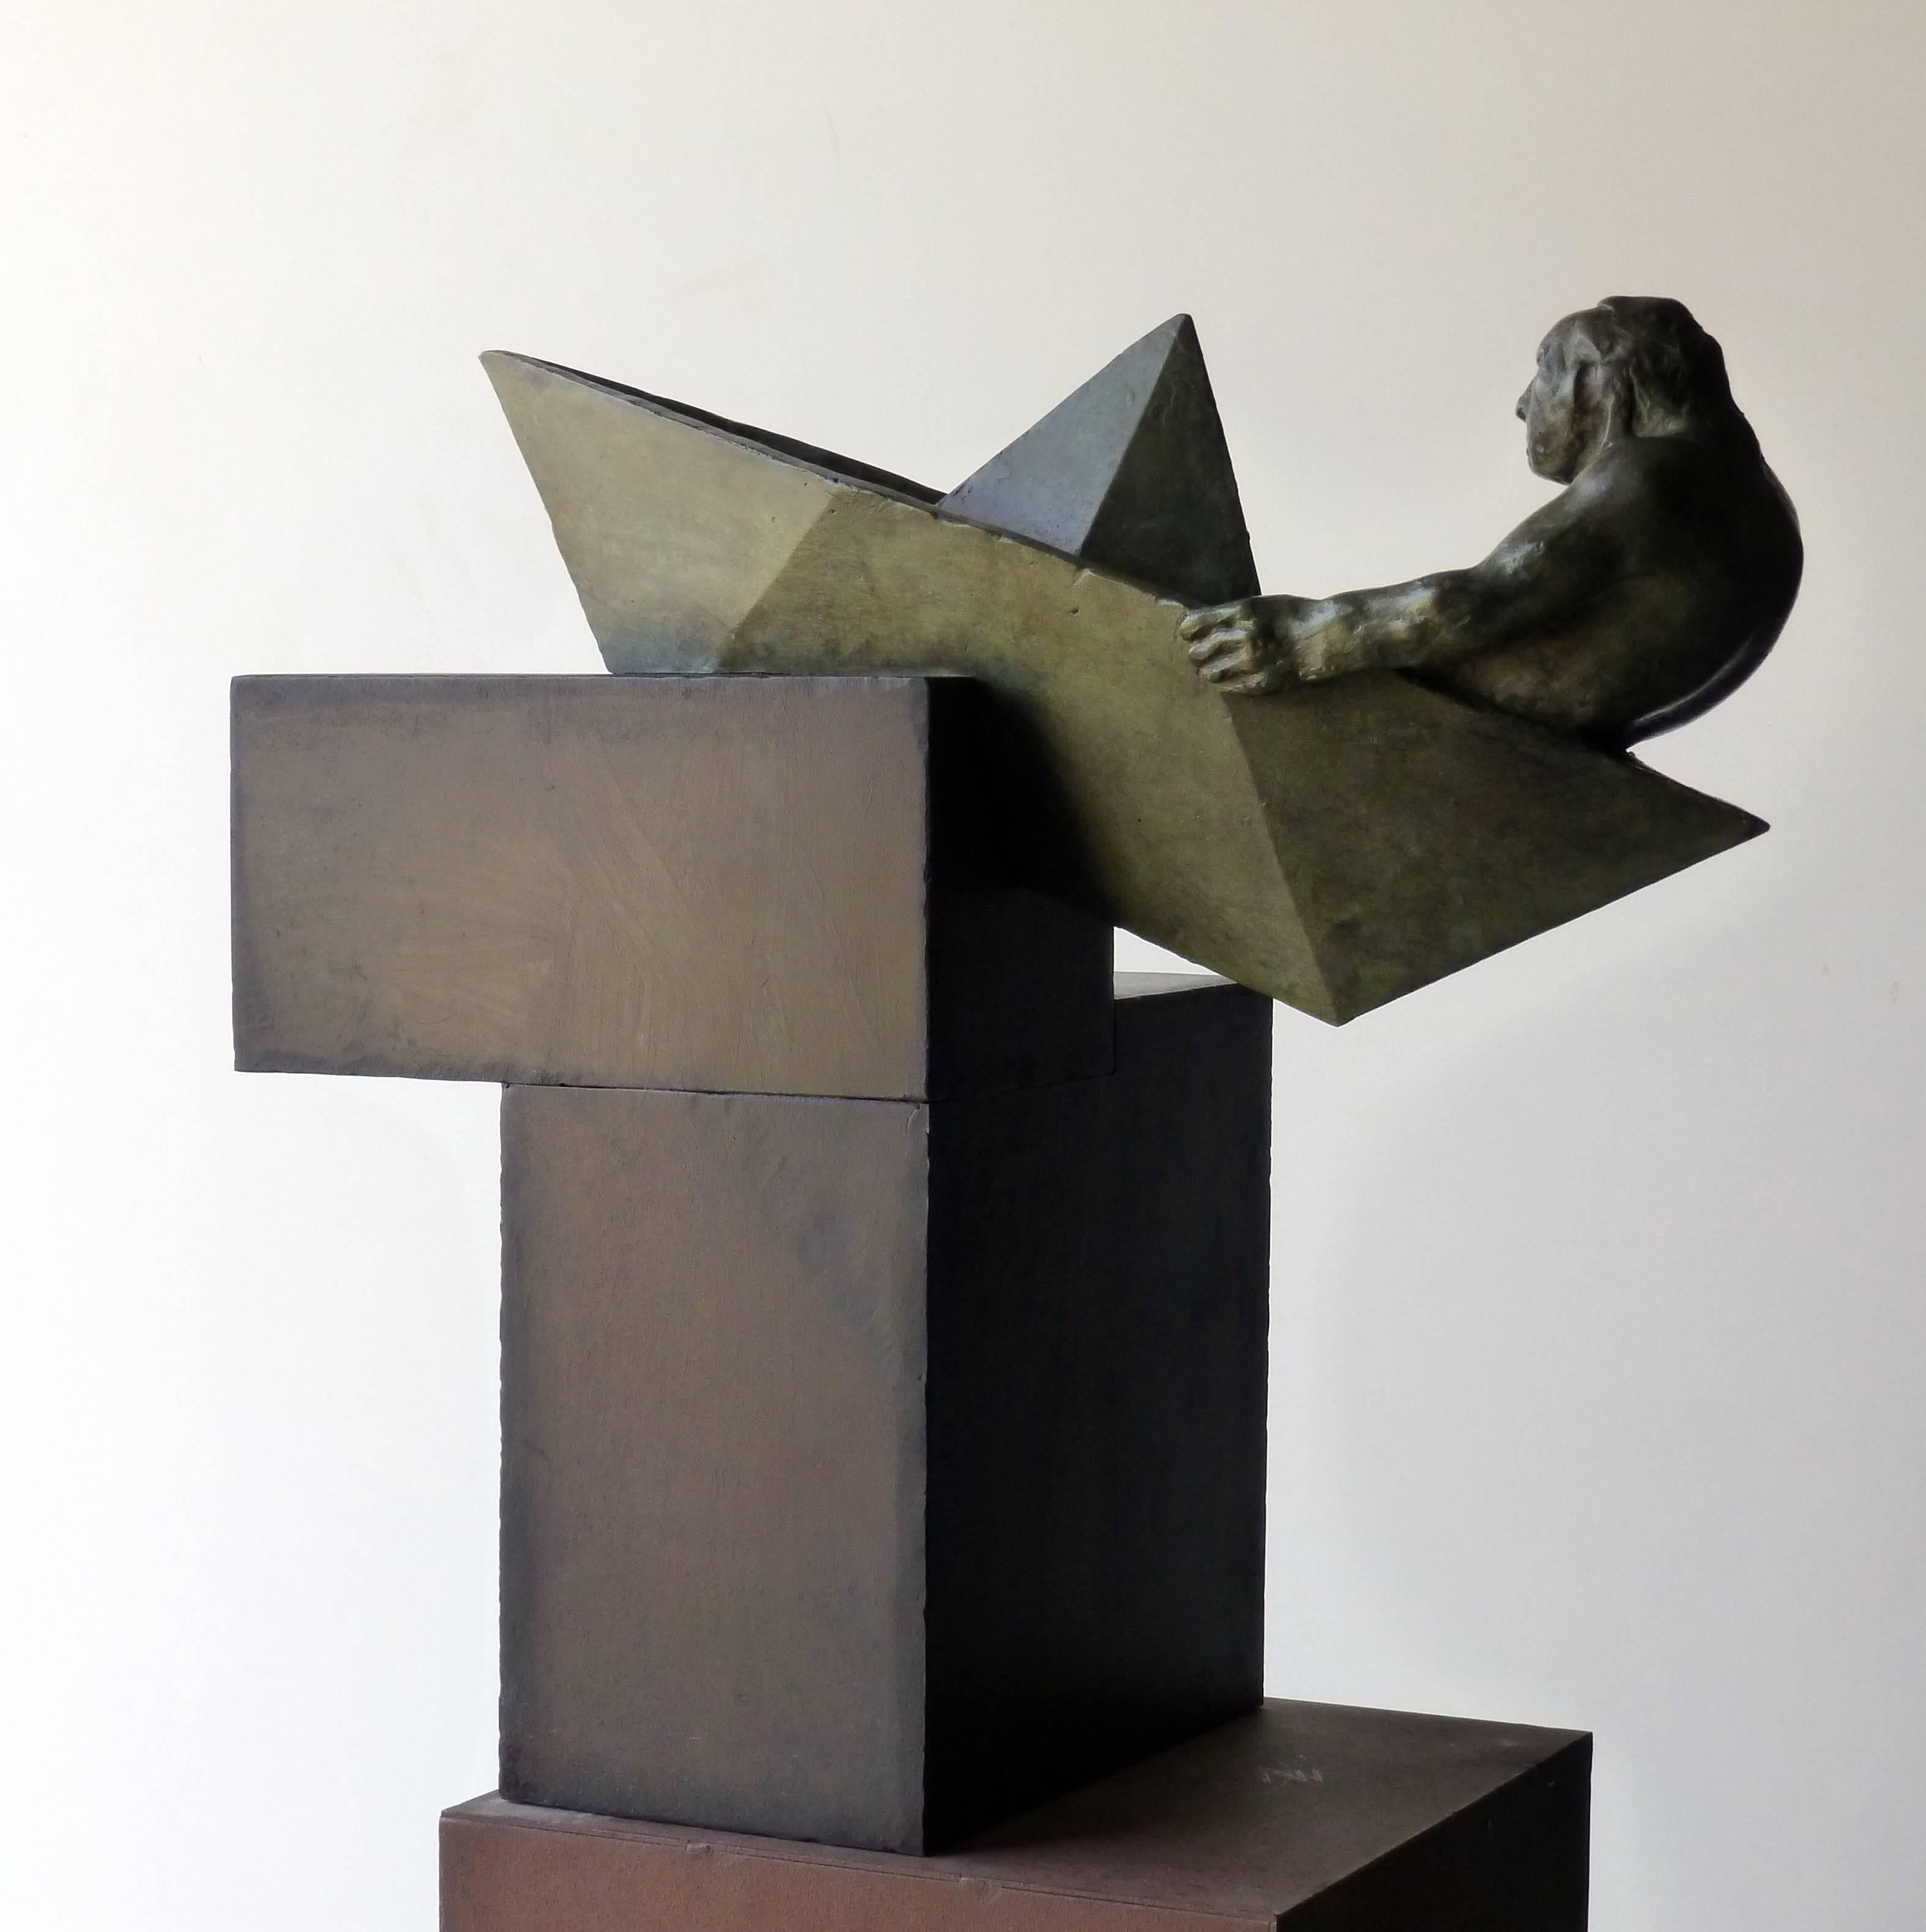 Amancio    man  boat  argonauta original bronze iron sculpture - Contemporary Sculpture by Amancio González Andrés